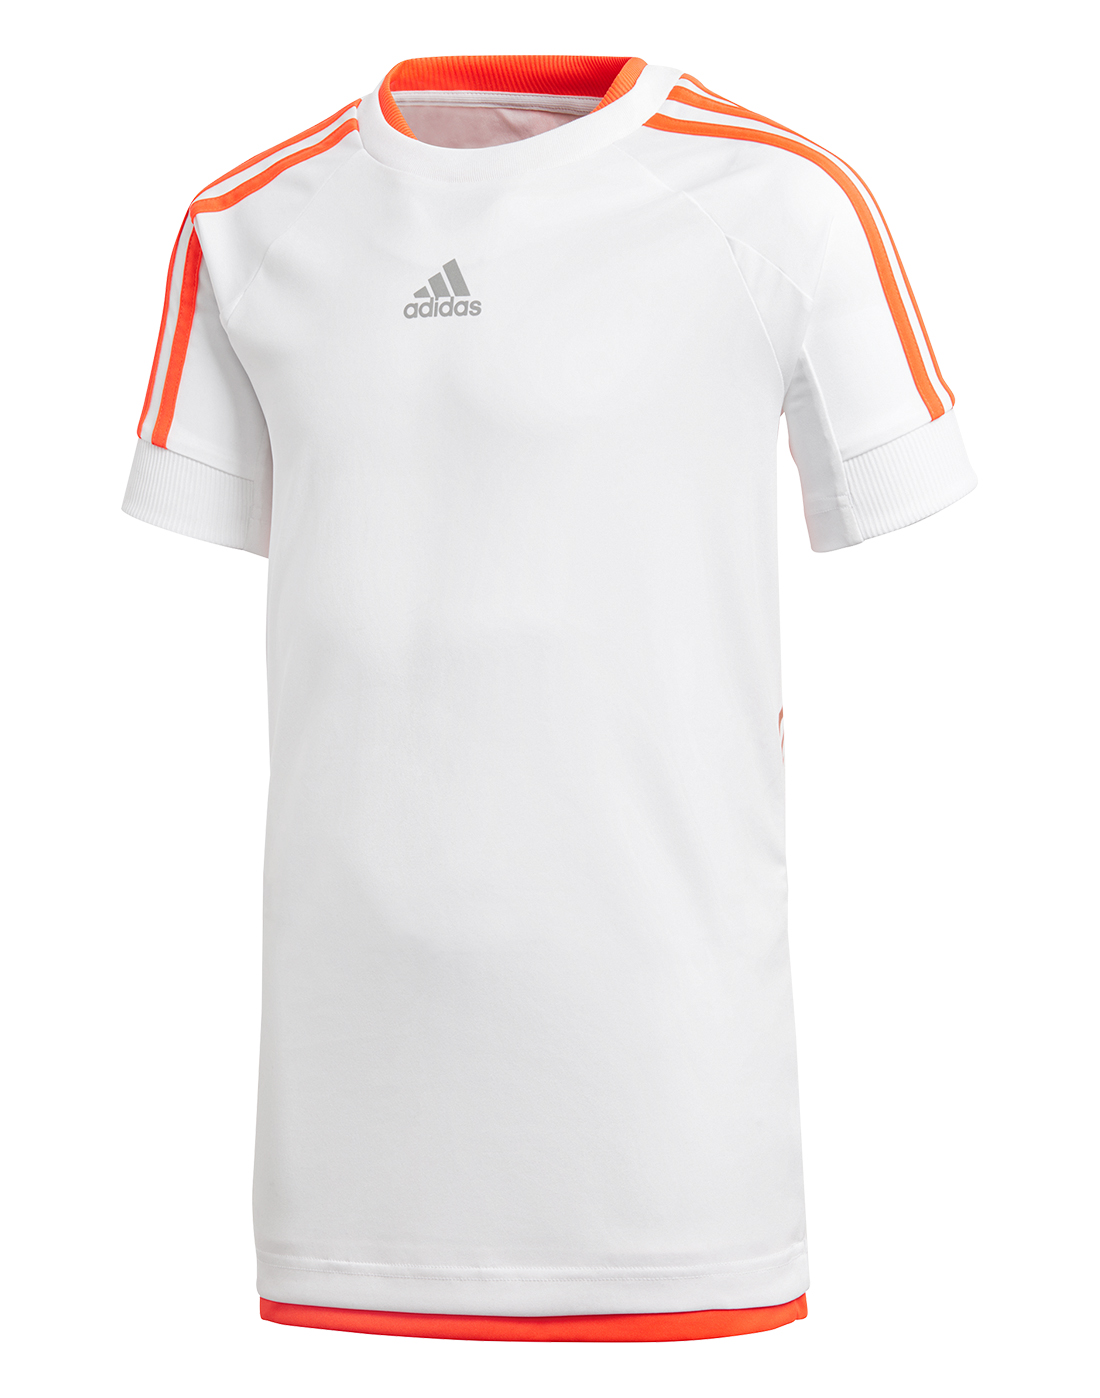 white and orange adidas shirt